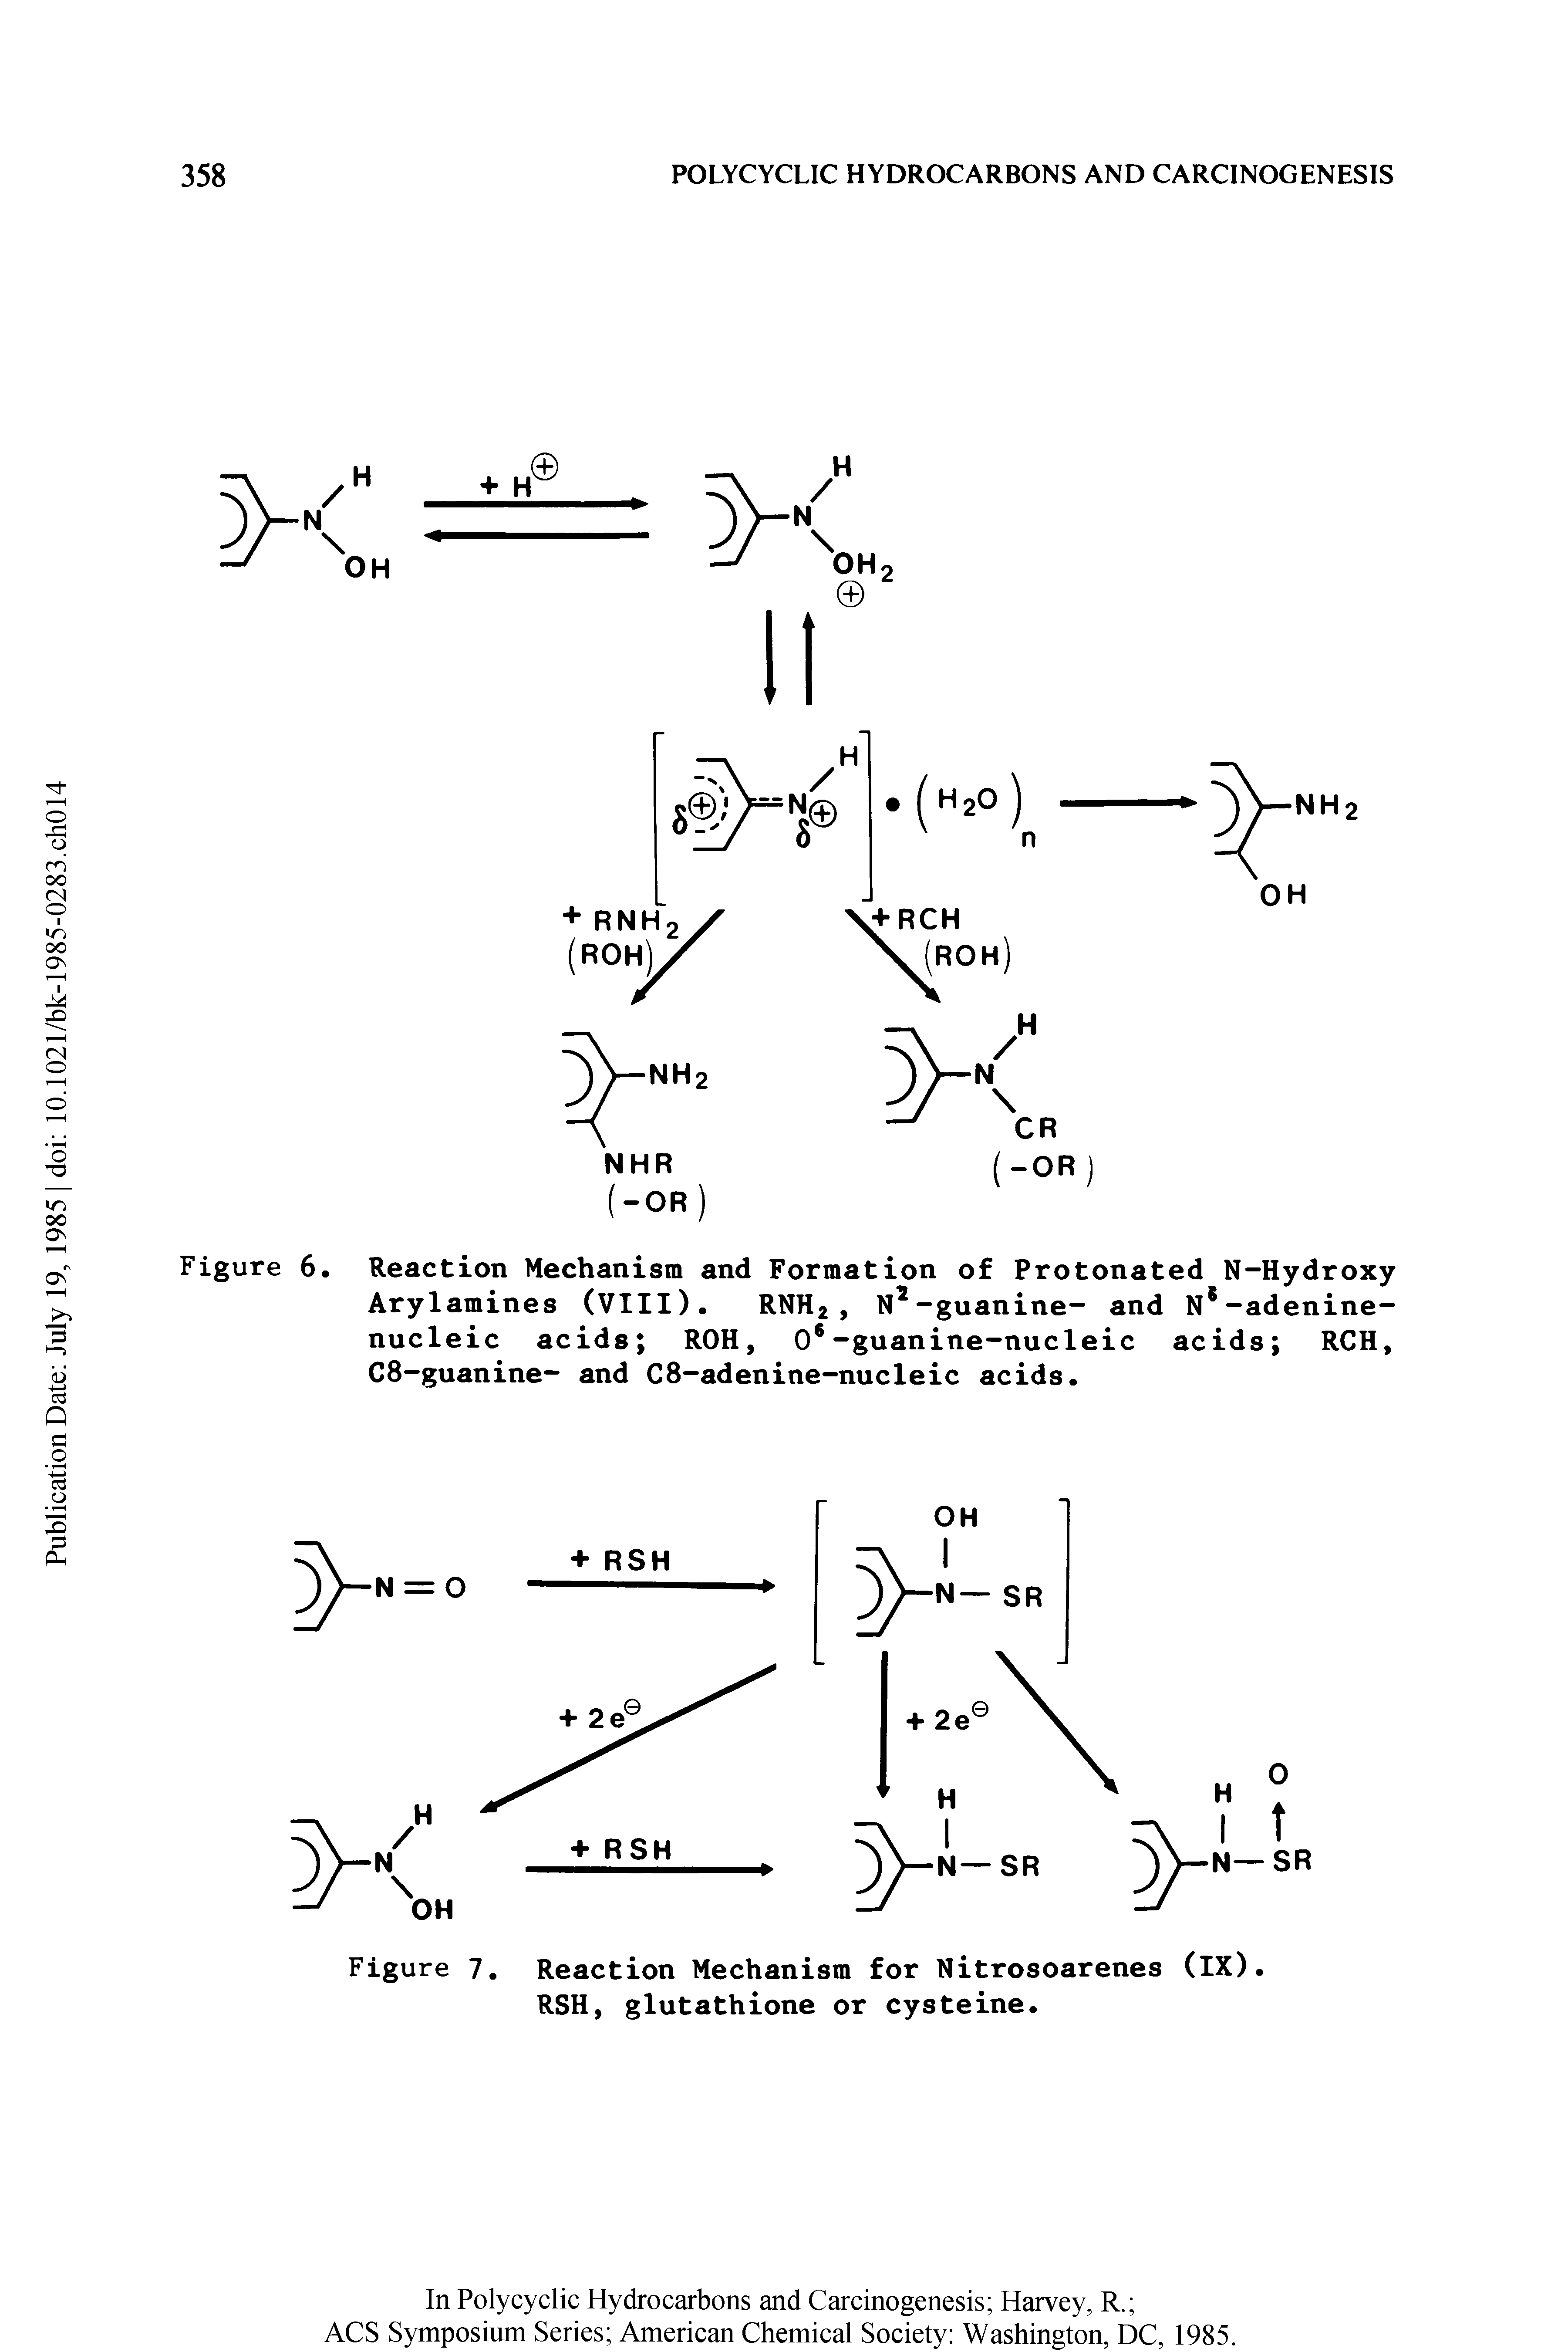 Figure 7. Reaction Mechanism for Nitrosoarenes (IX). RSH, glutathione or cysteine.